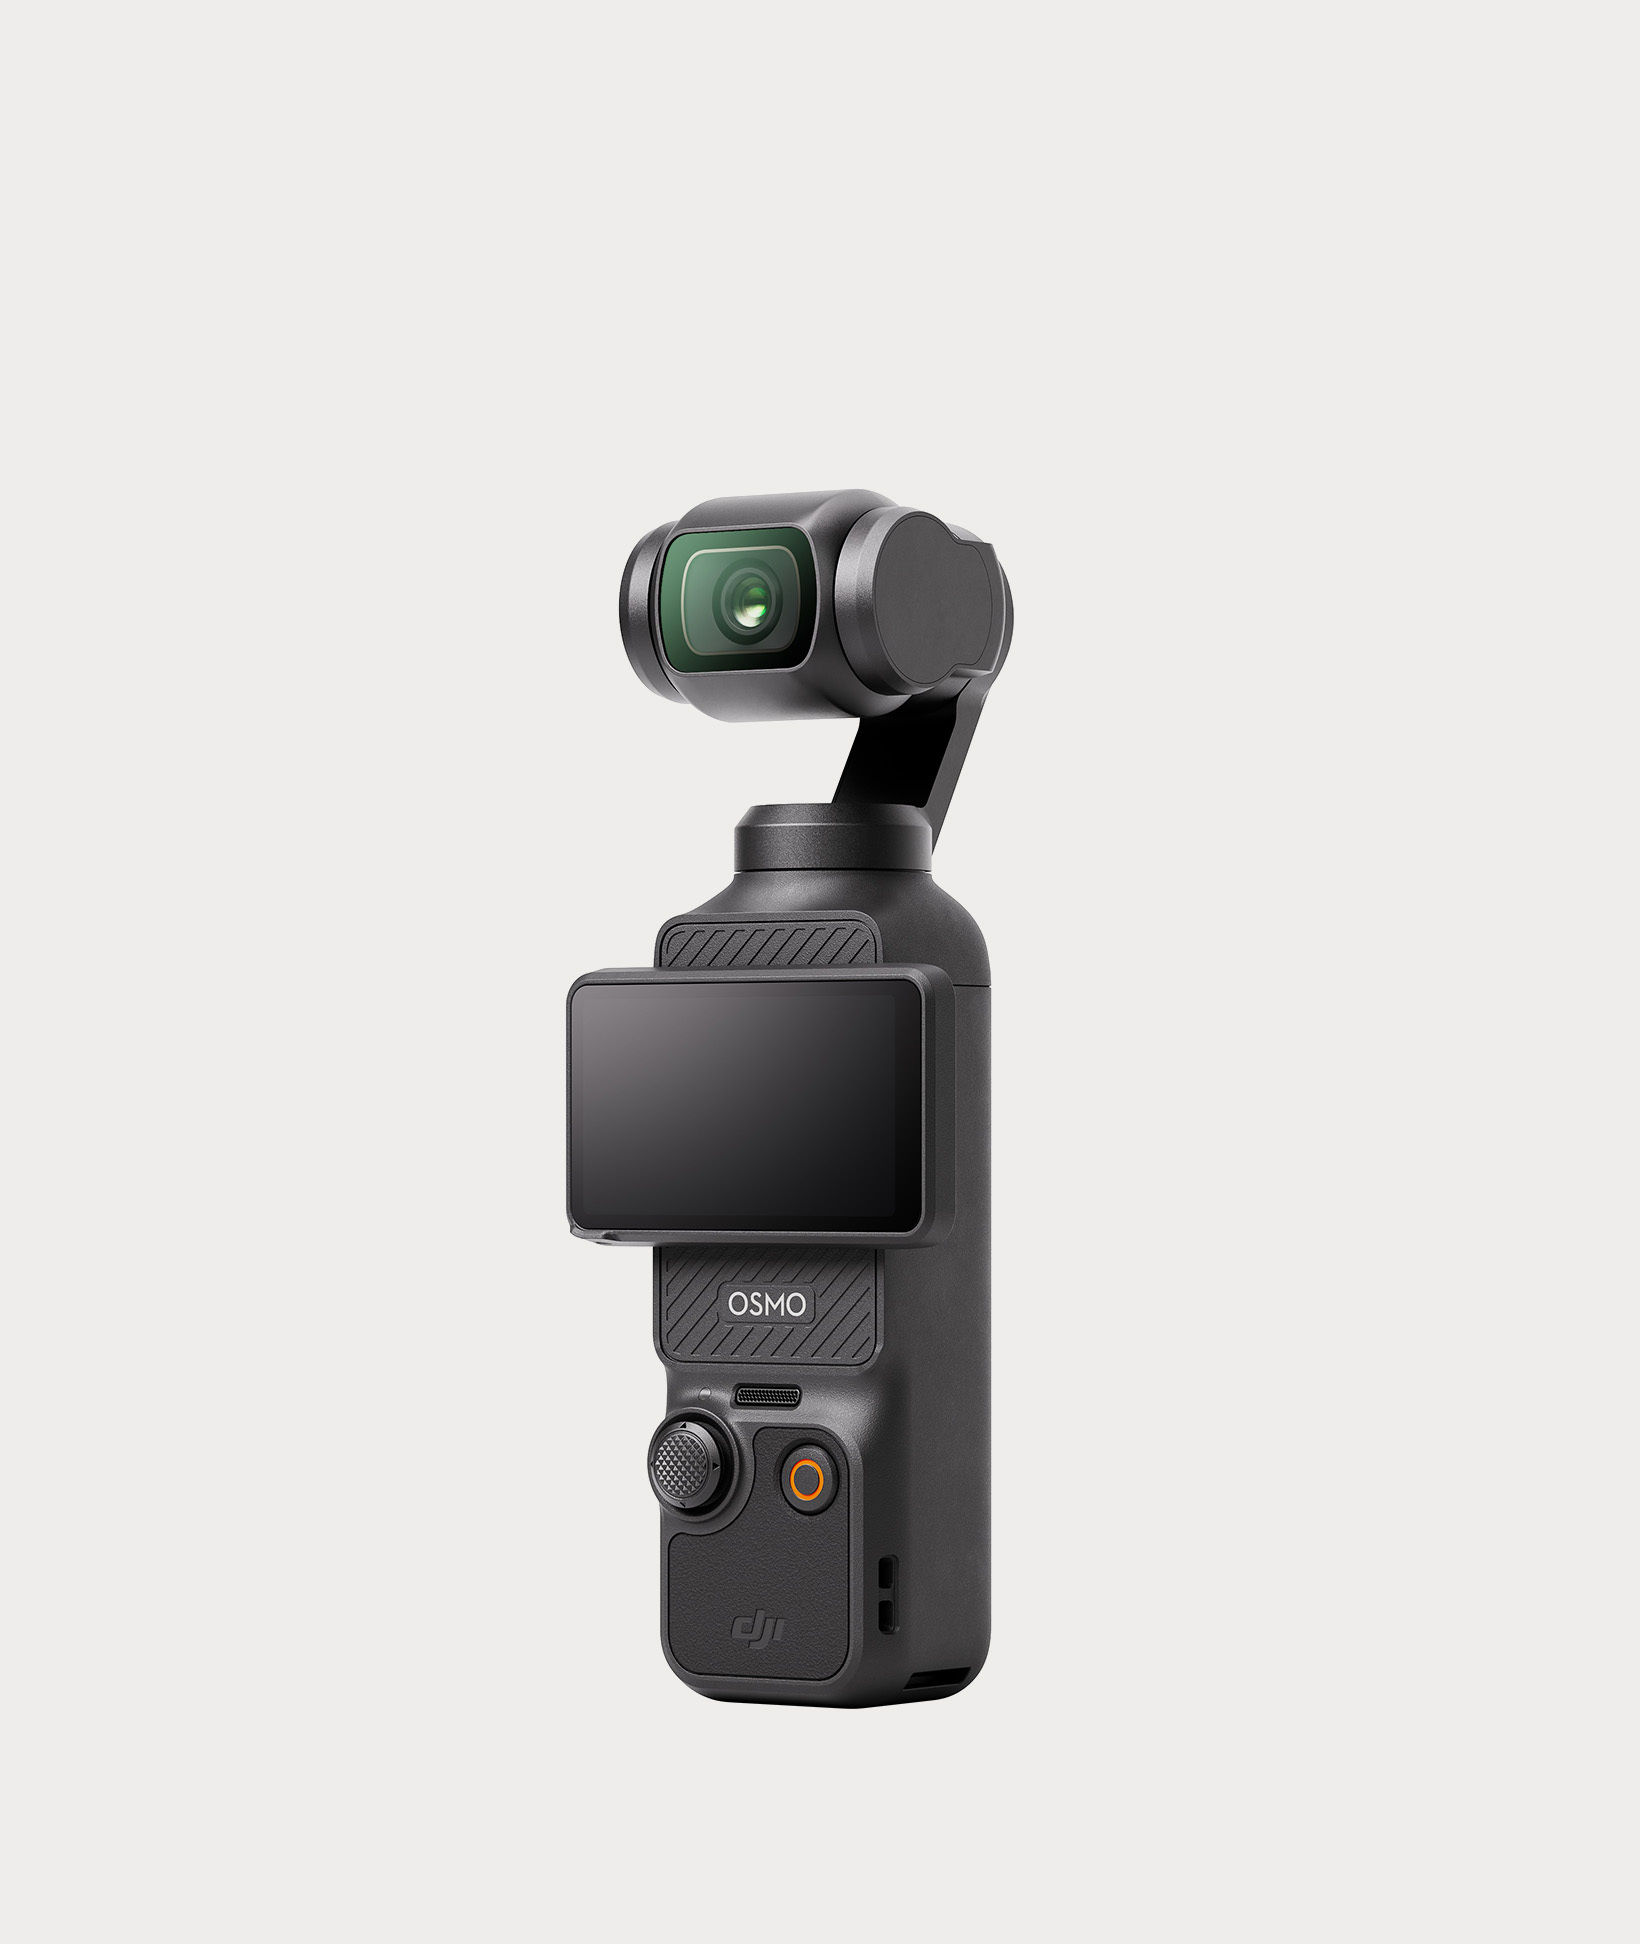 DJI Intros Osmo Pocket 3 Pocket-Sized Gimbal Camera